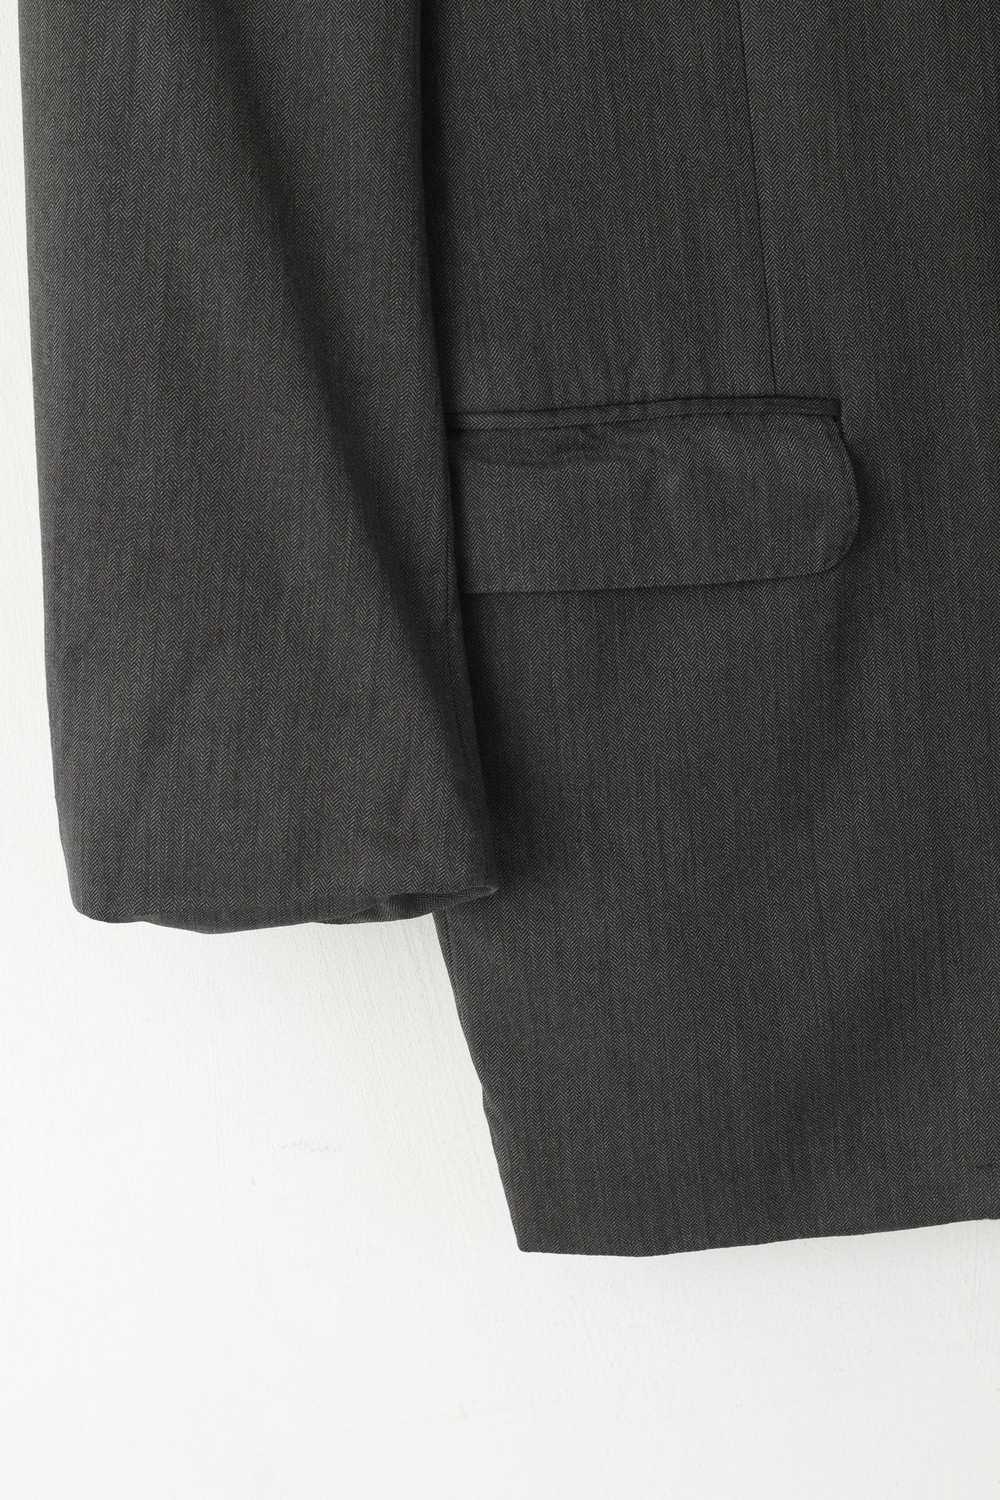 Canali Canali Men 56 46 Blazer Gray Vintage Wool … - image 3